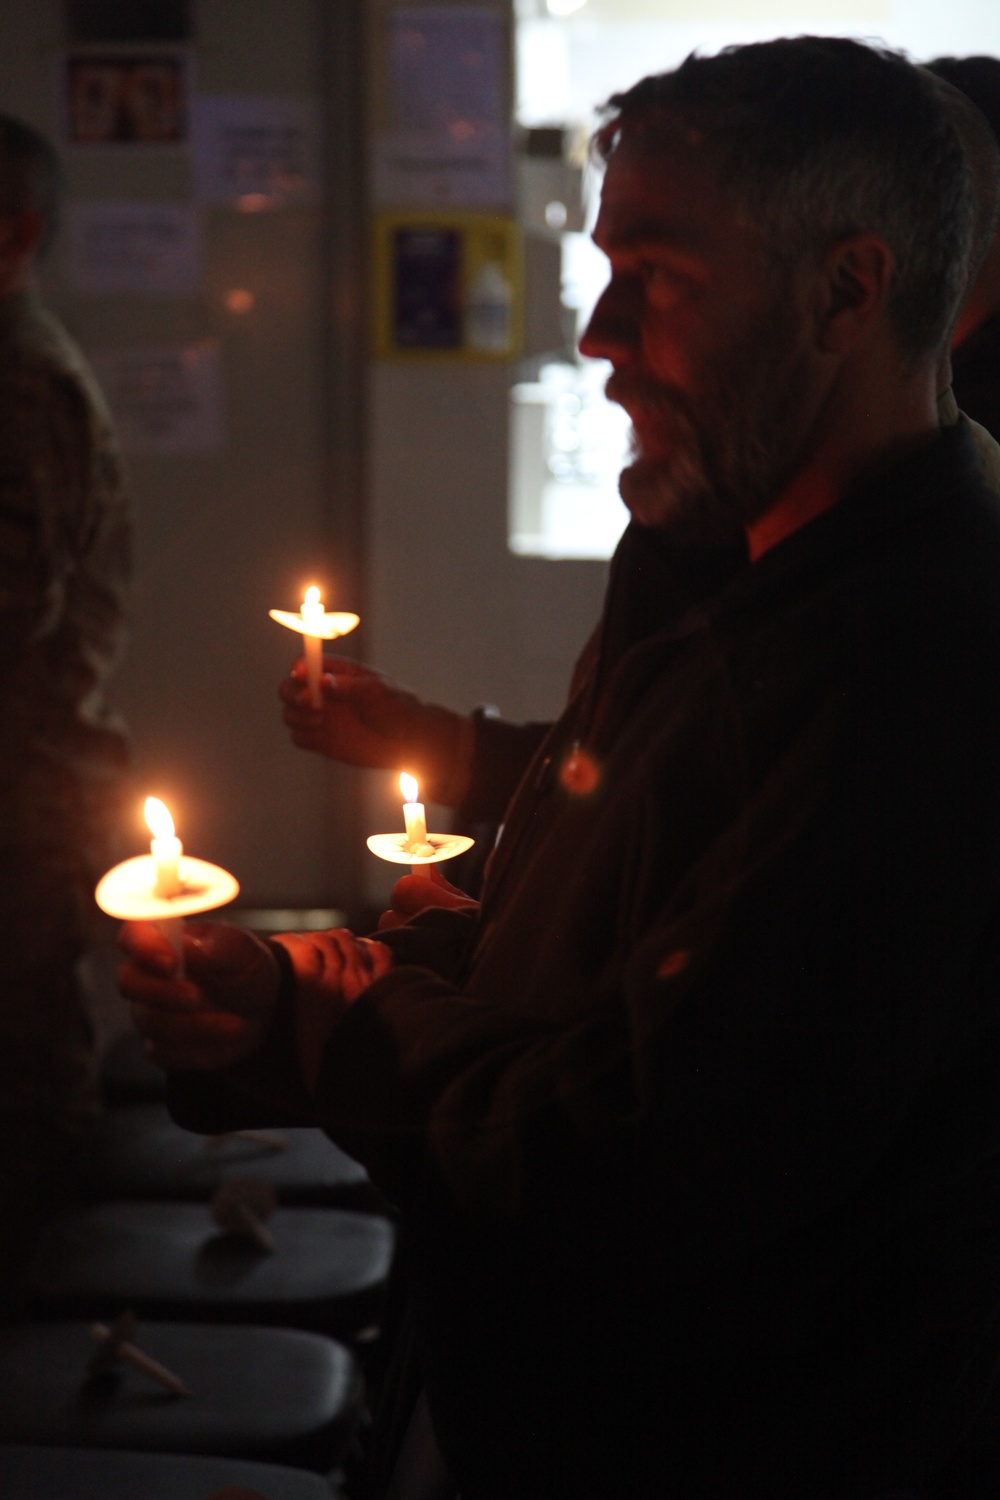 Candle light vigil on Christmas Eve